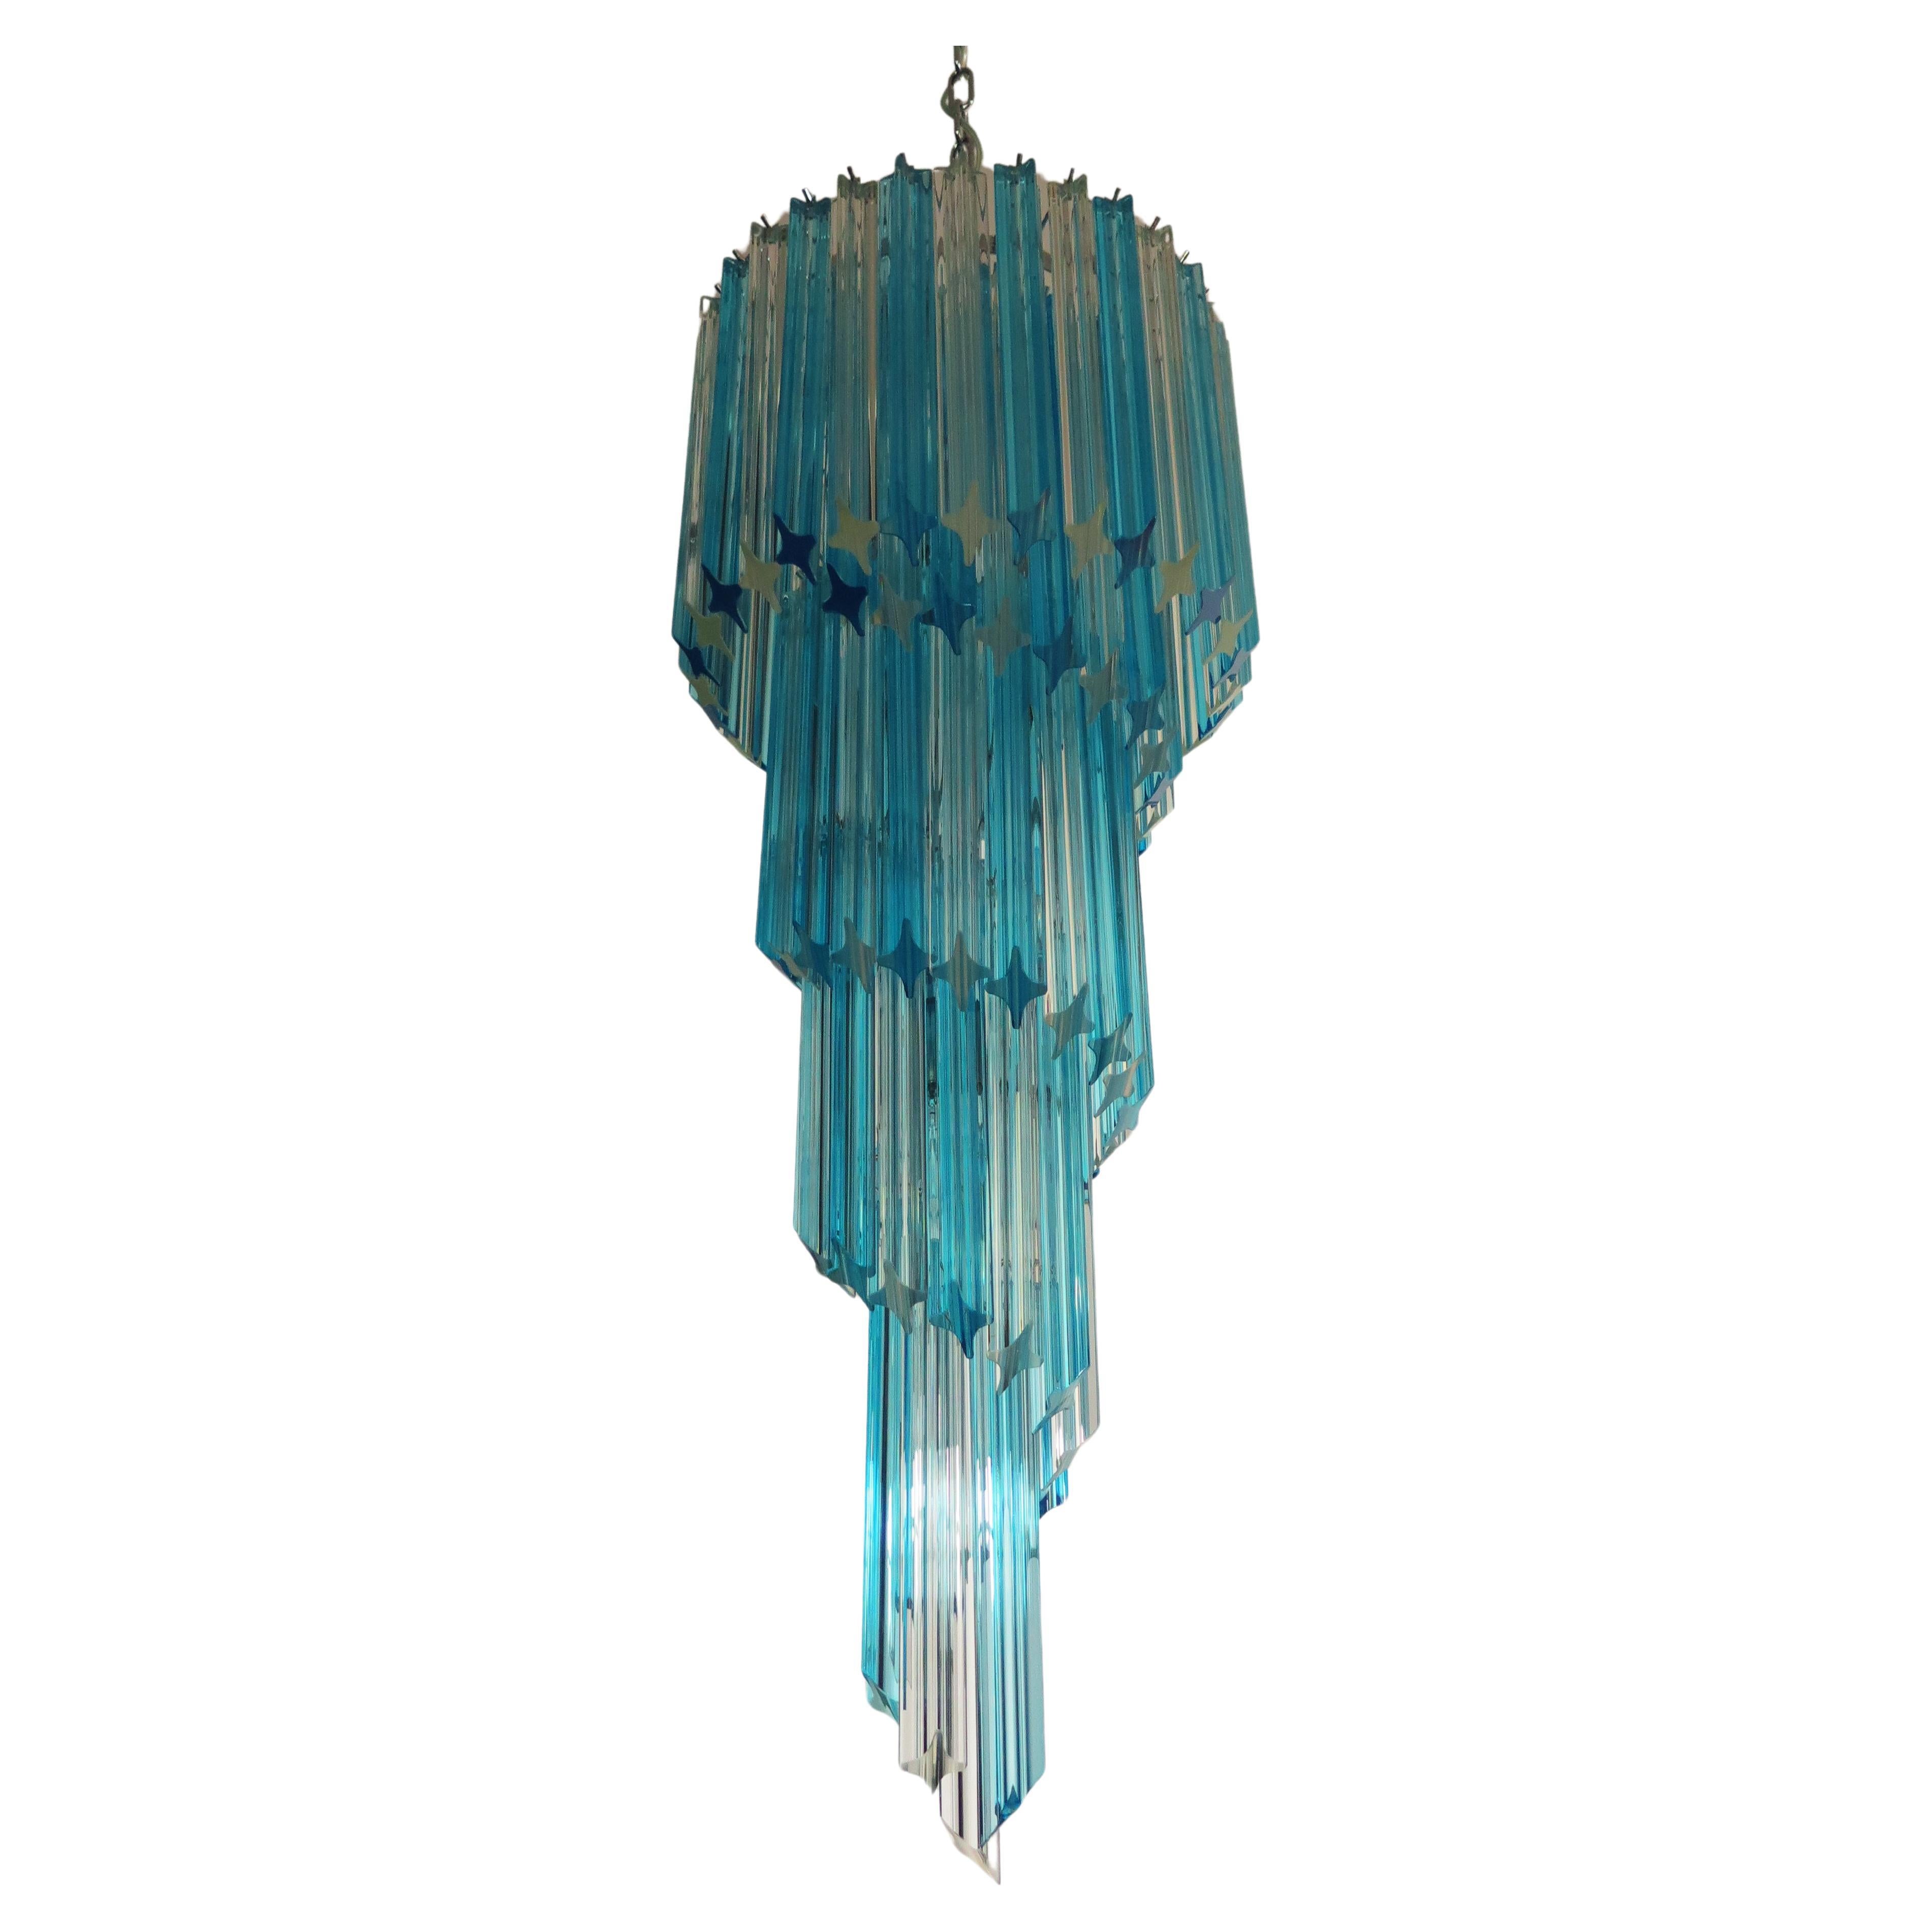 Murano chandelier 86 transparent and blue quadriedri prism For Sale